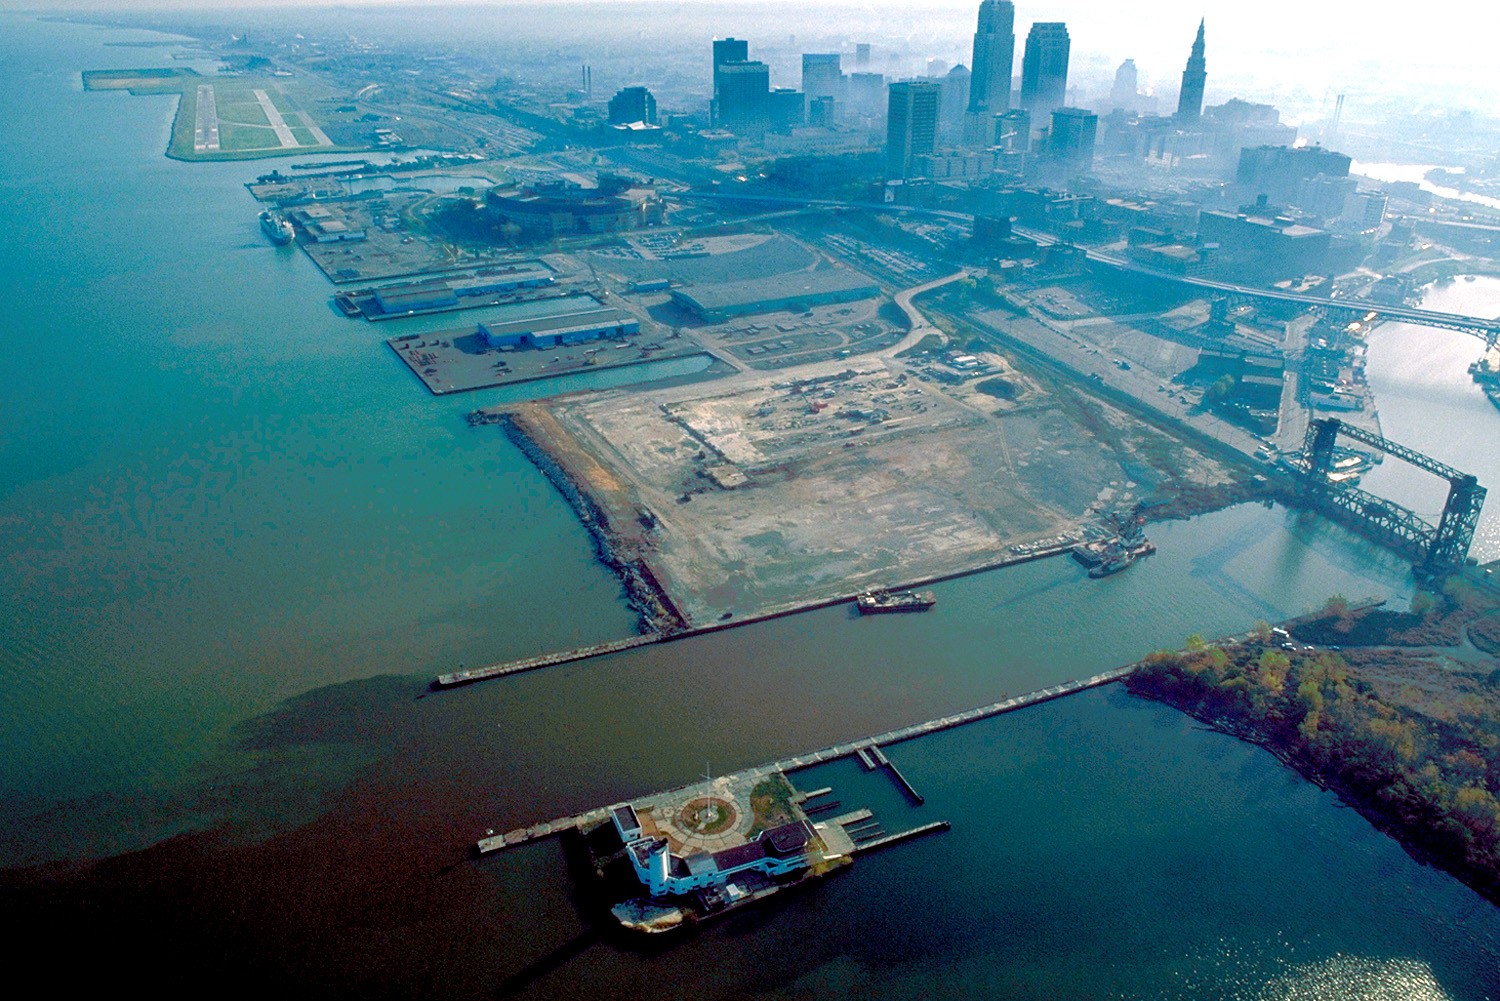 https://en.wikipedia.org/wiki/Cleveland#/media/File:Cleveland_Ohio_aerial_view.jpg